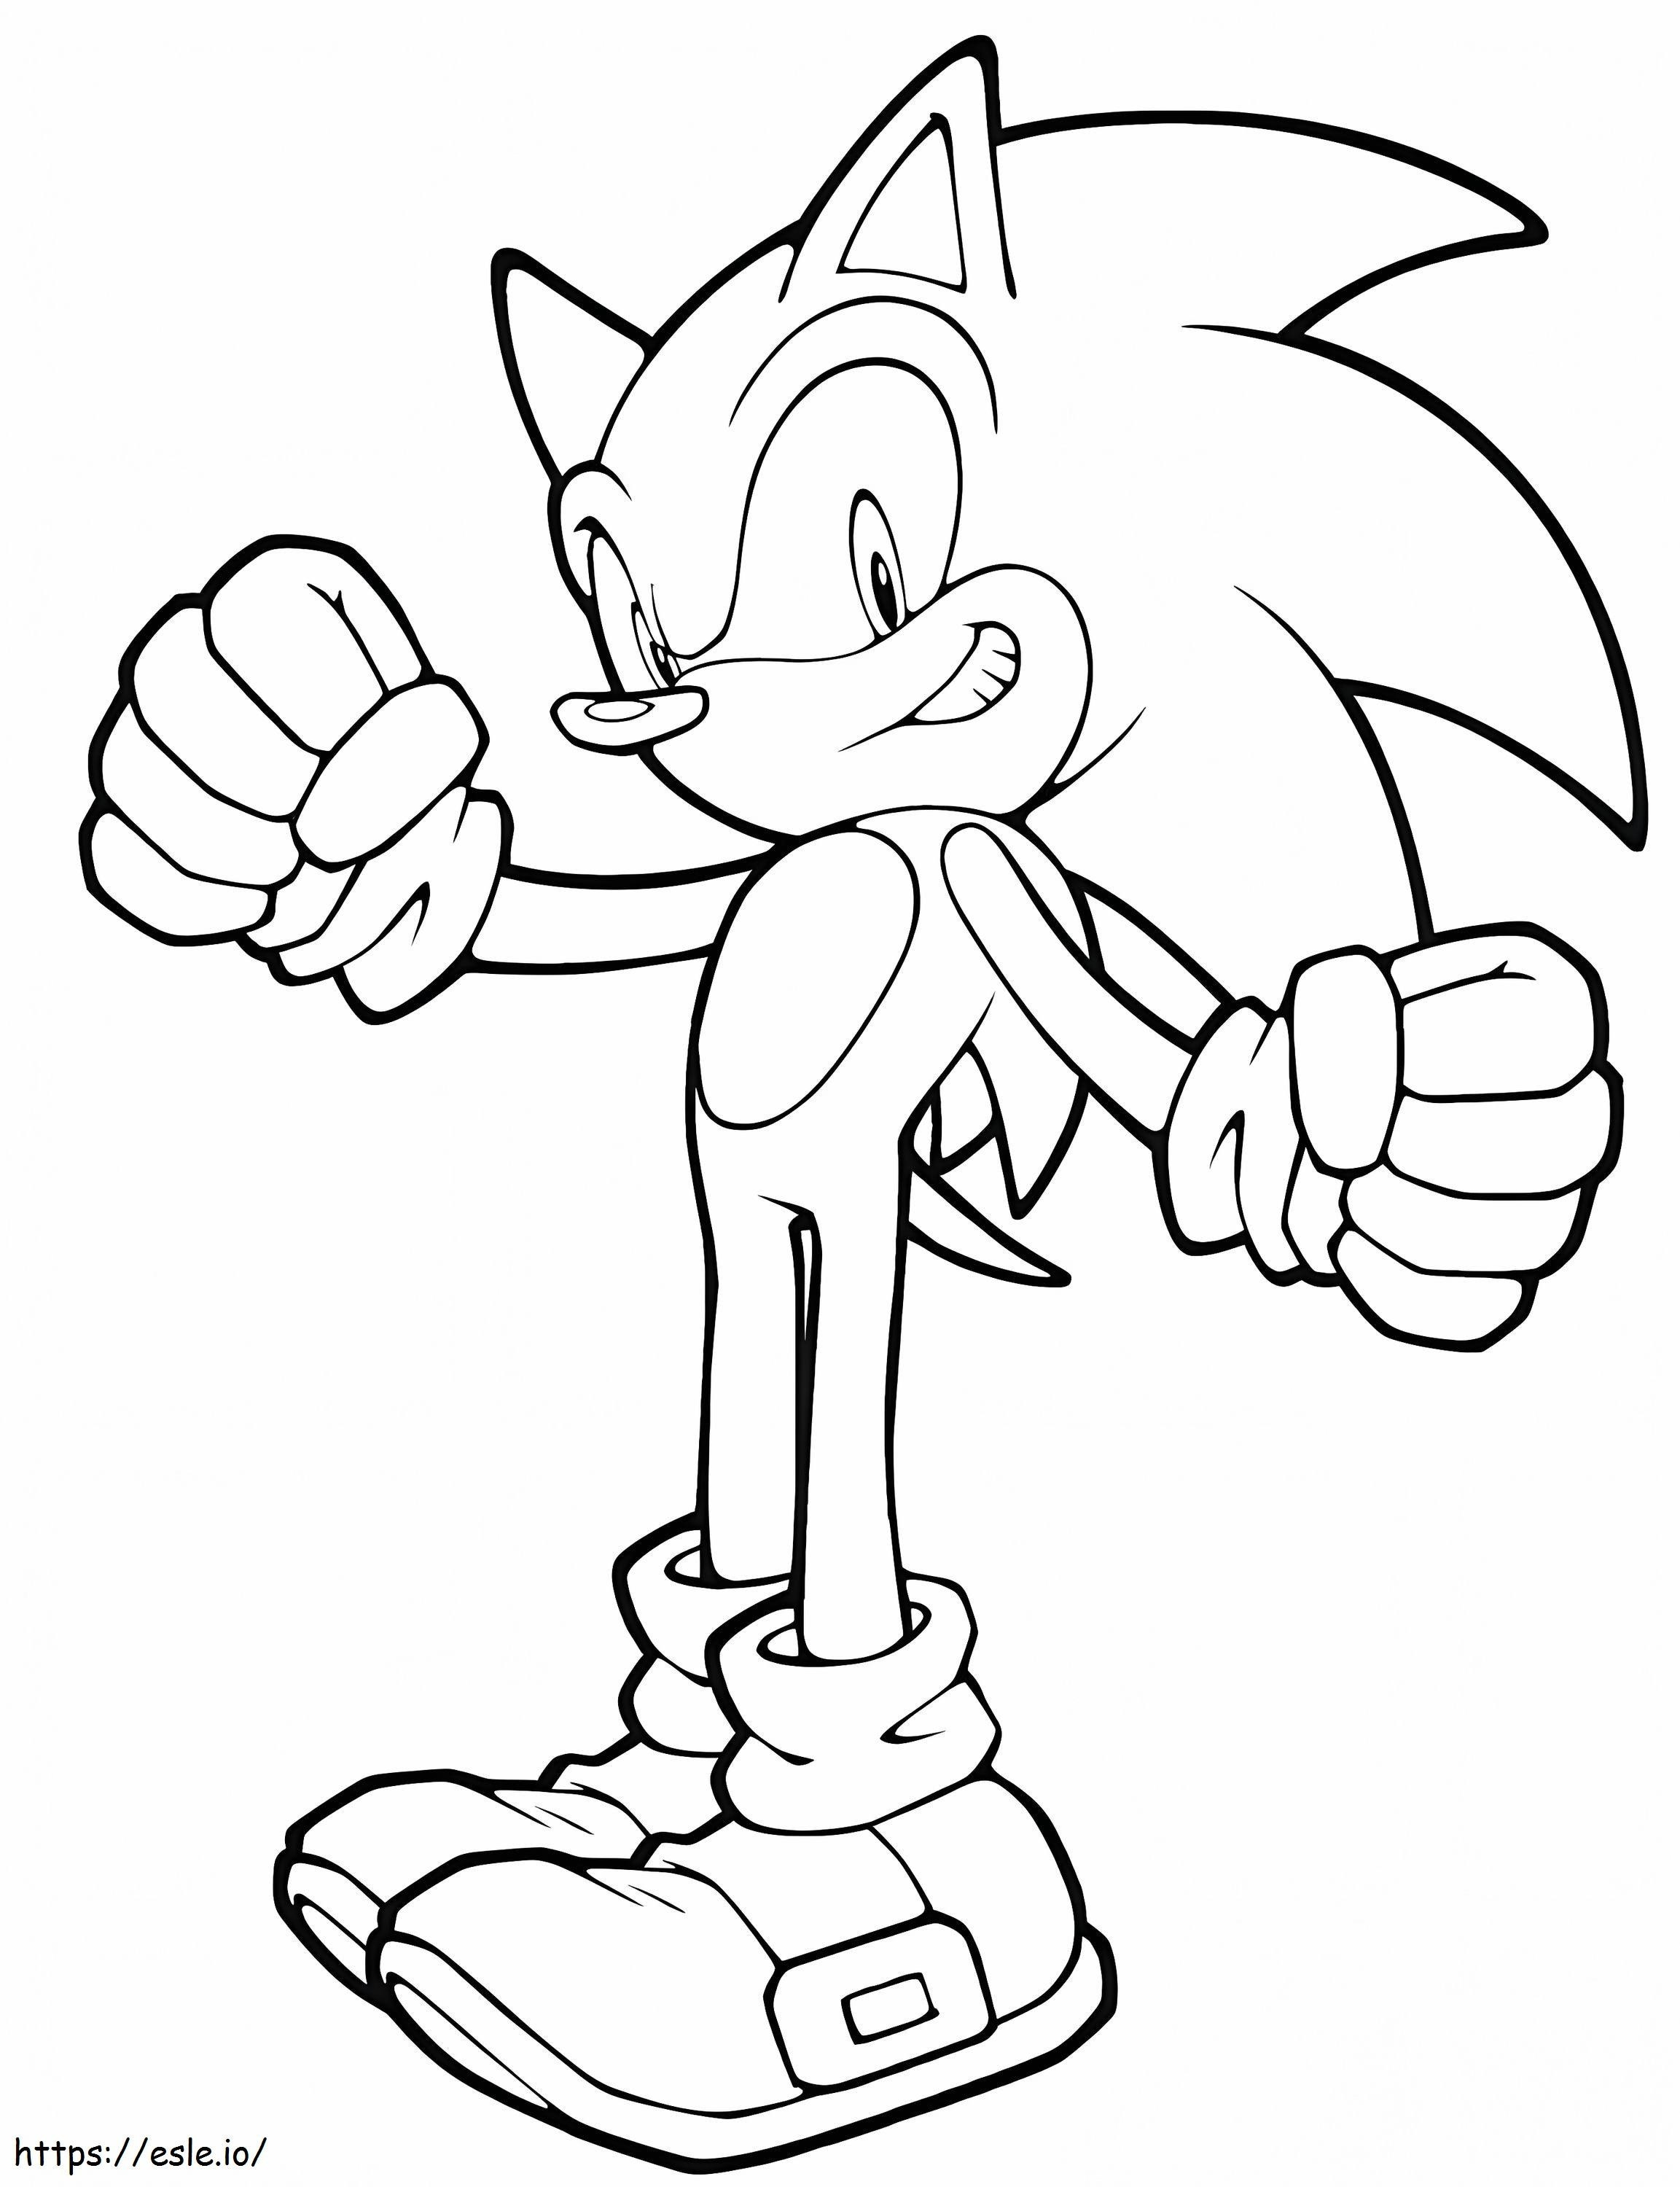  Sonic do druku kolorowanka